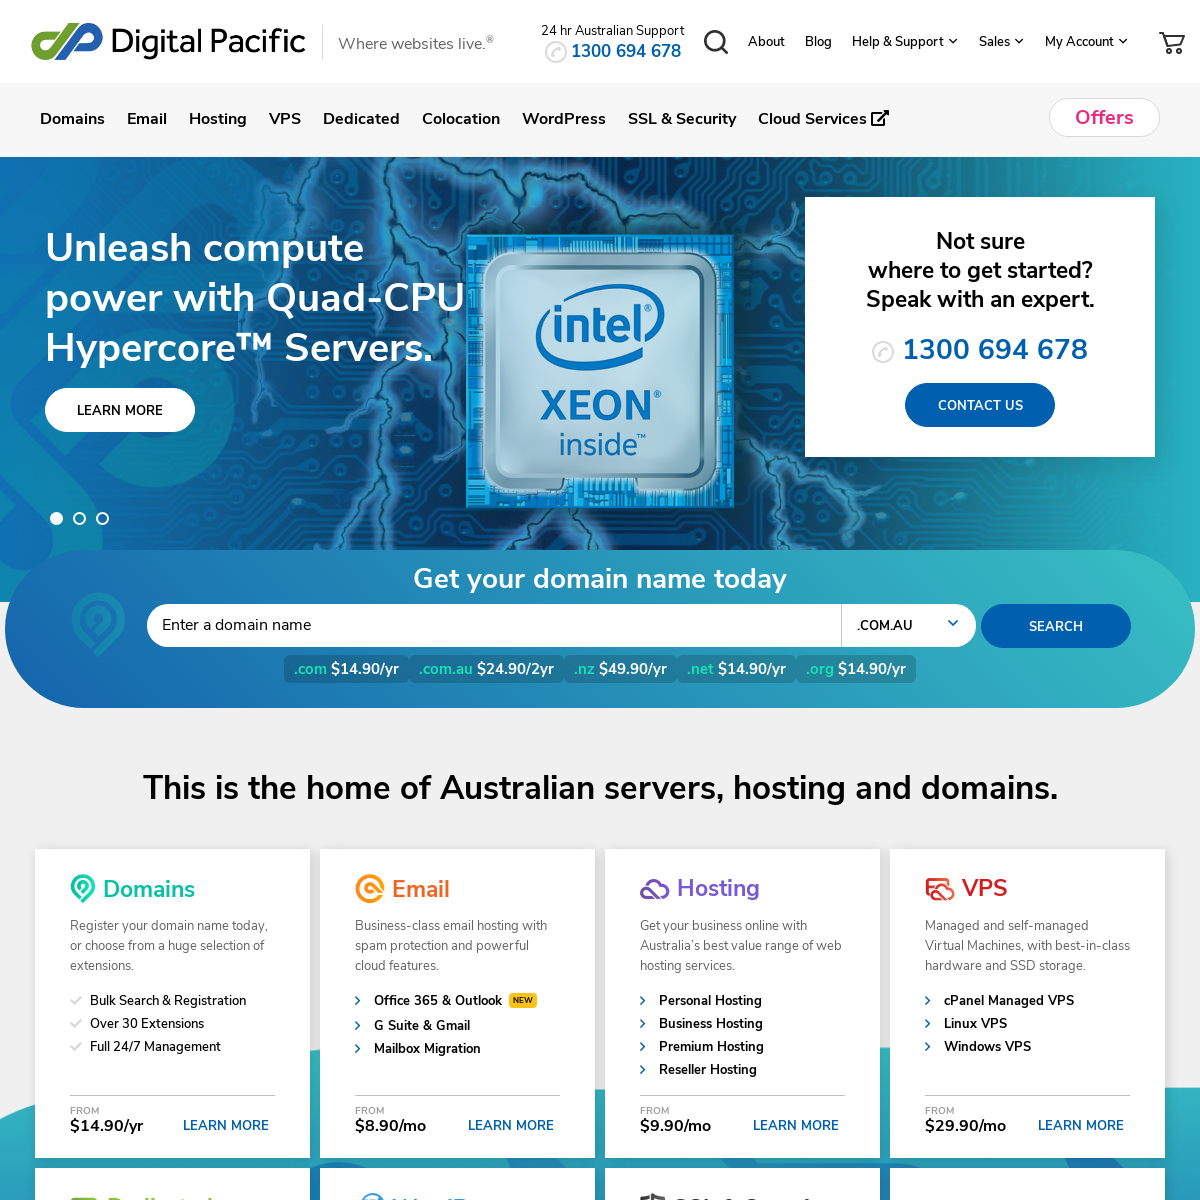 A complete backup of digitalpacific.com.au